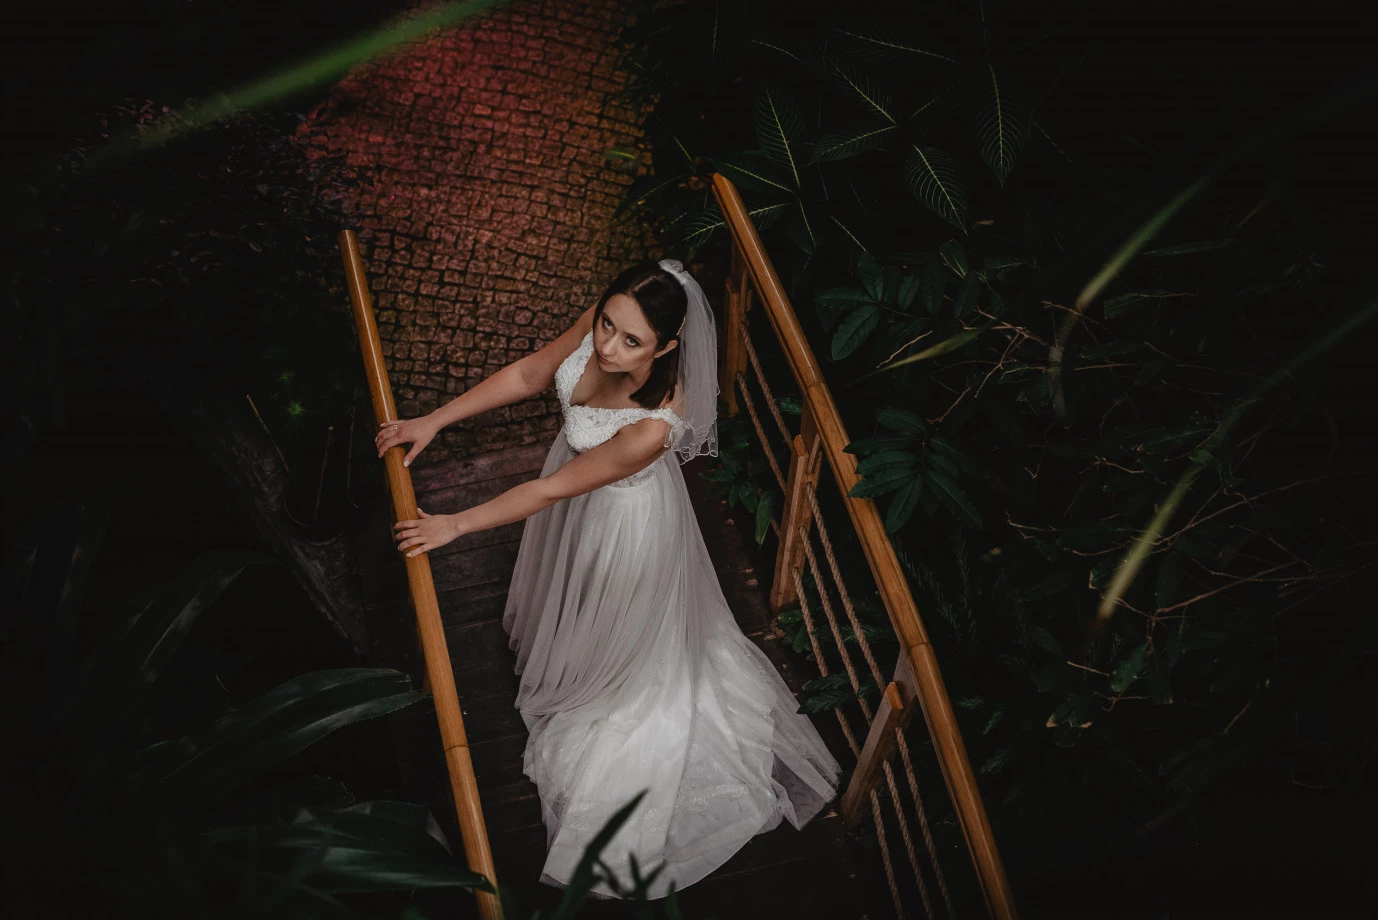 fotograf bedzin fotokompozytorpl portfolio zdjecia slubne inspiracje wesele plener slubny sesja slubna